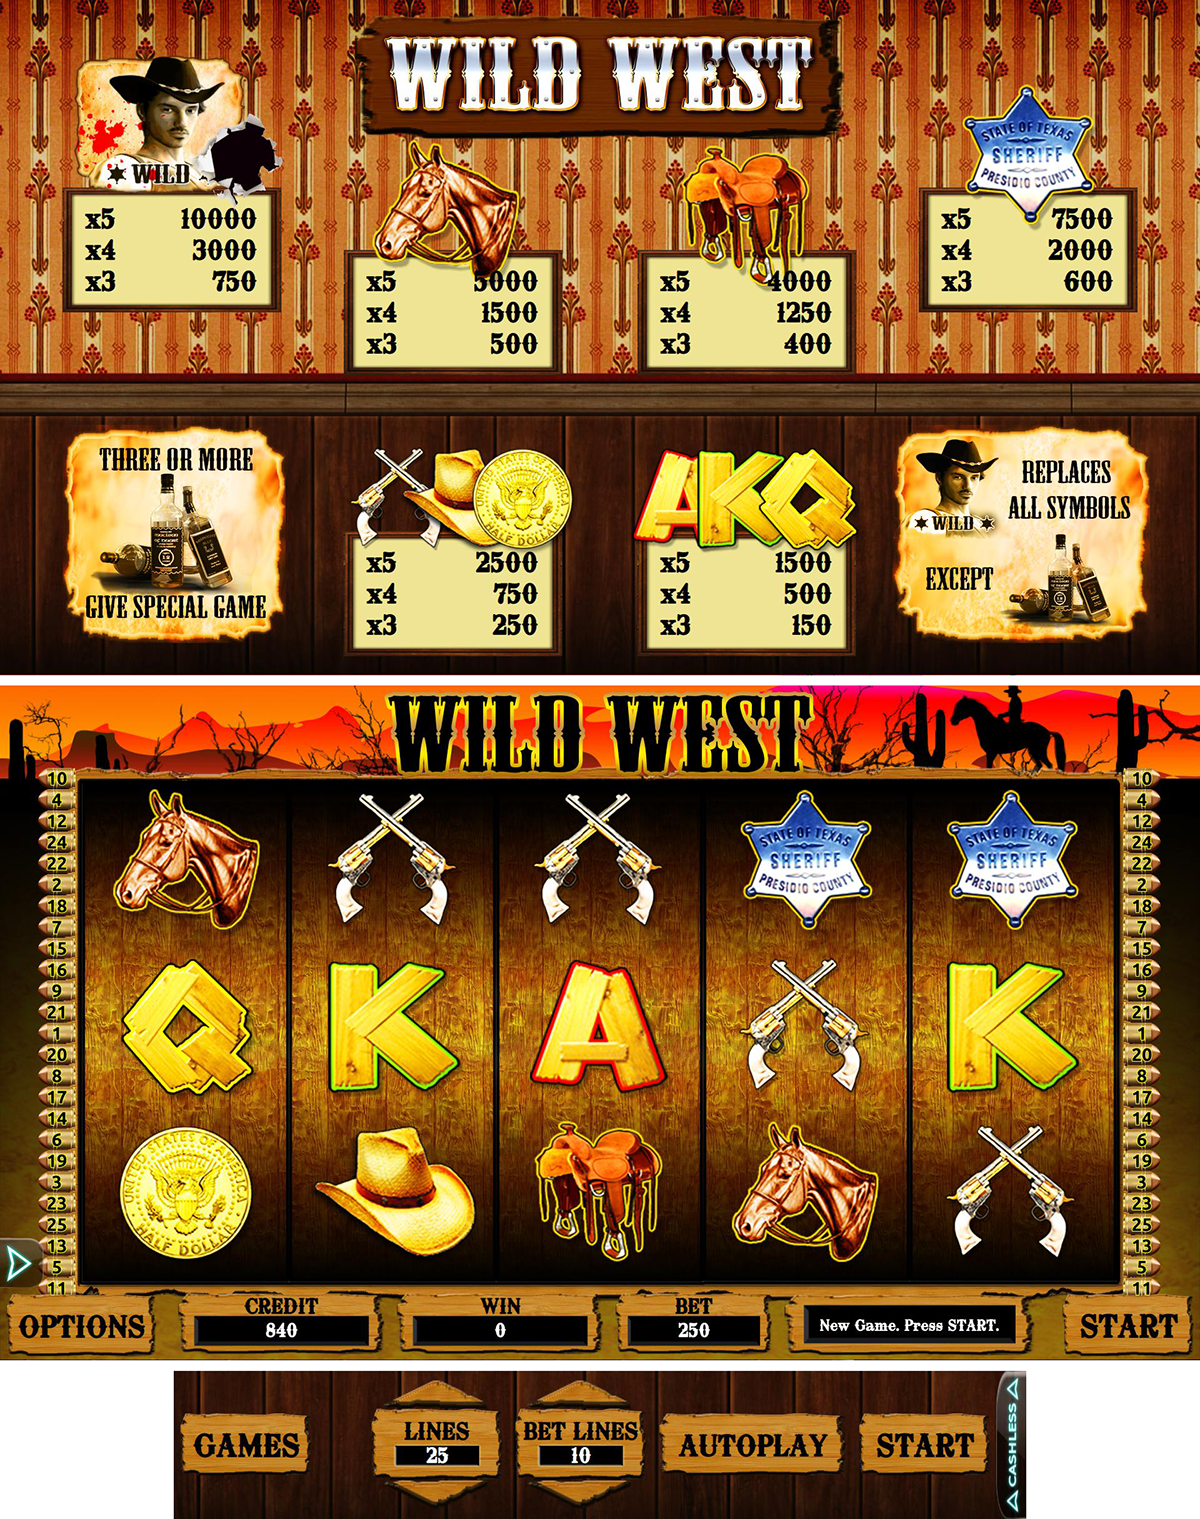 WILD WEST Slot Game on Behance